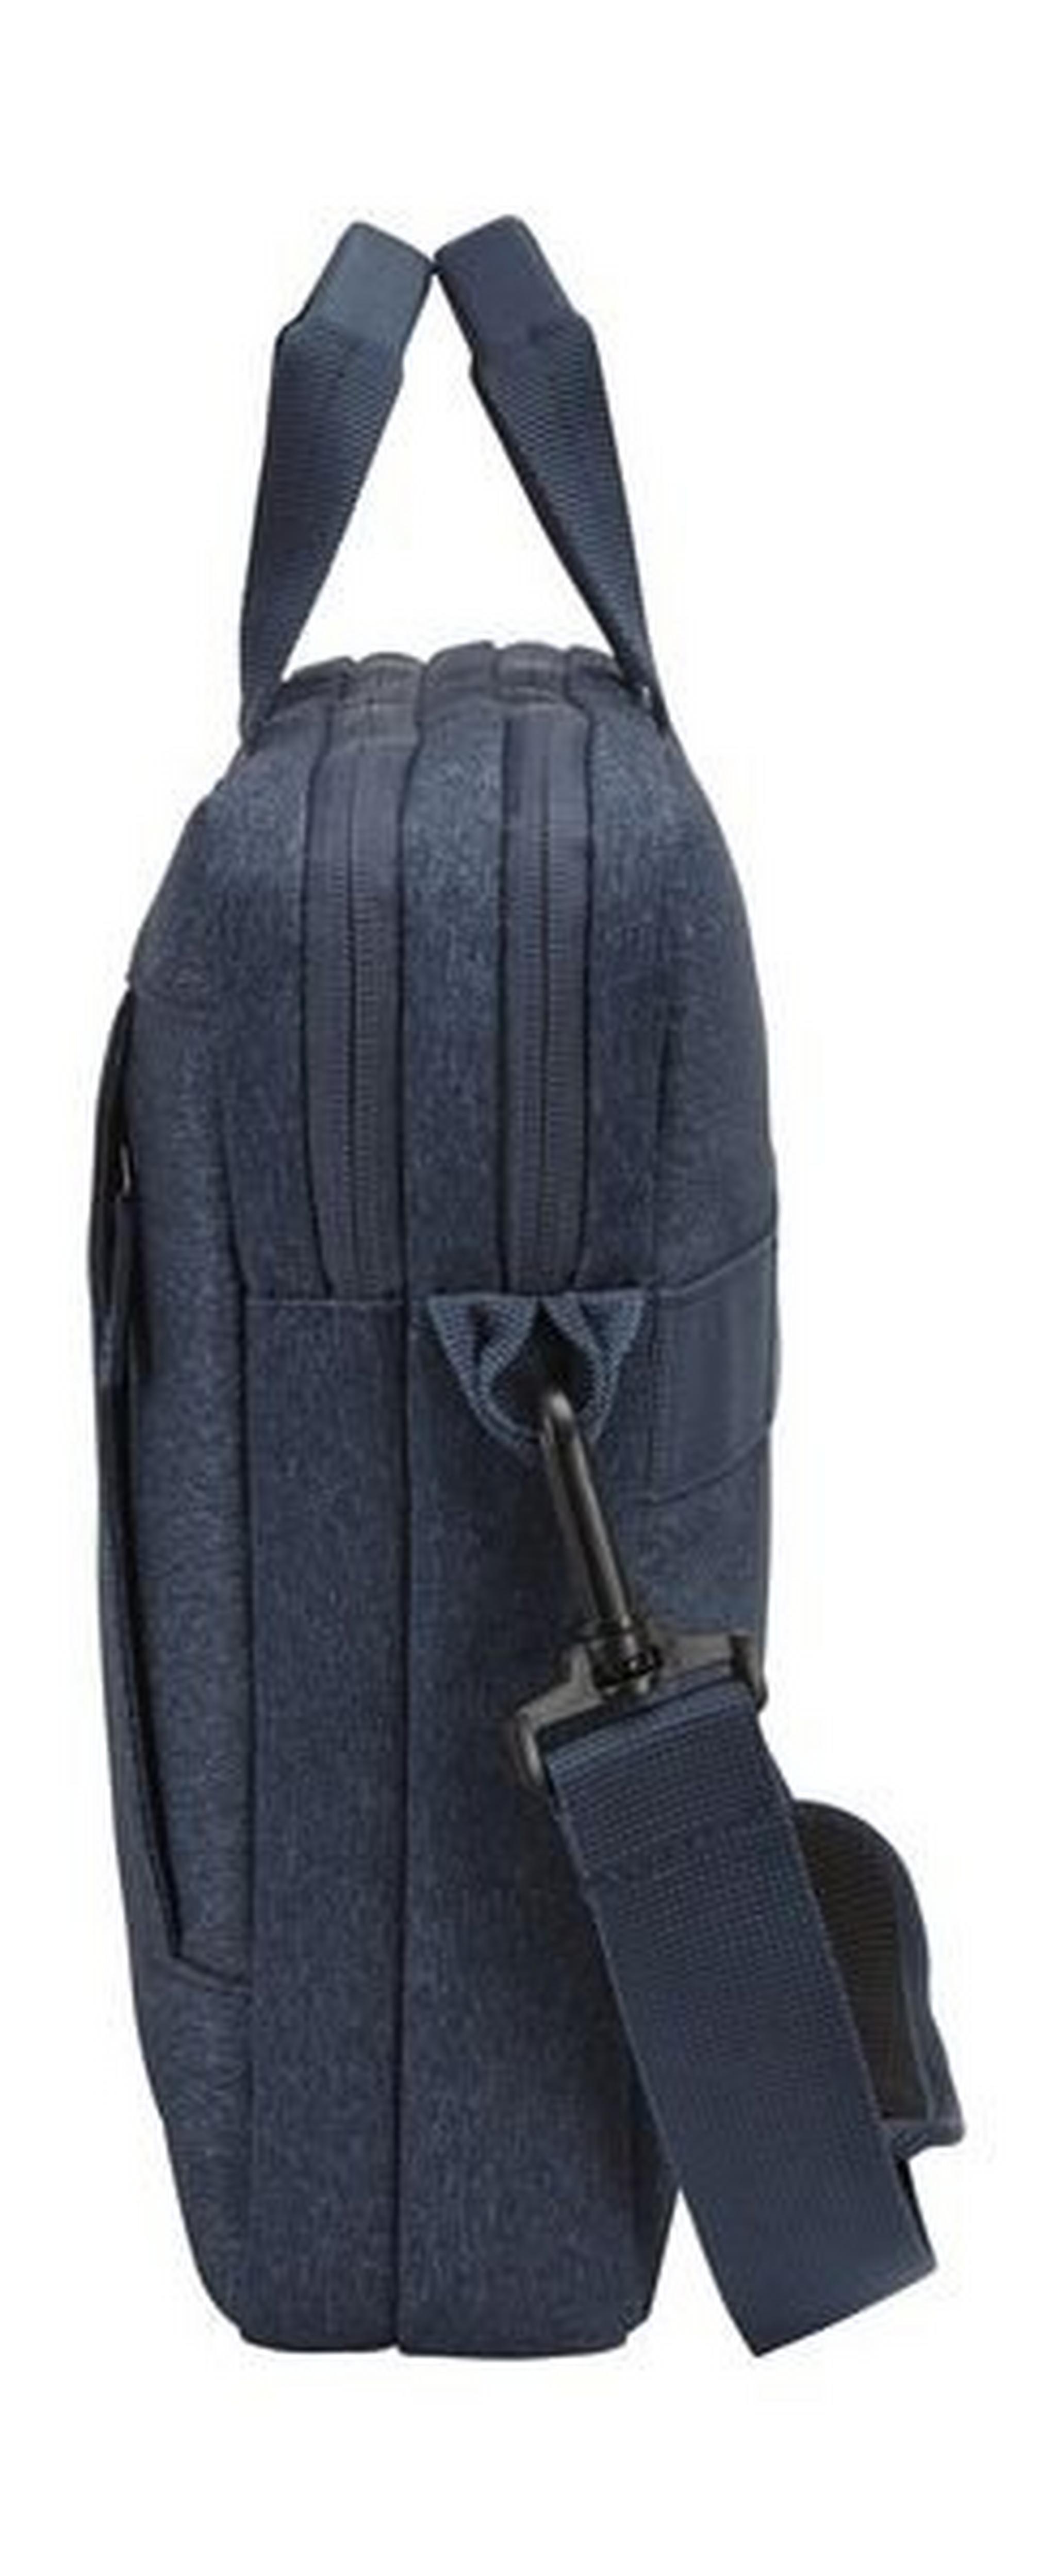 Case Logic Huxton Toploader Bag for 15.6-inch Laptops (HUXA115B) - Blue